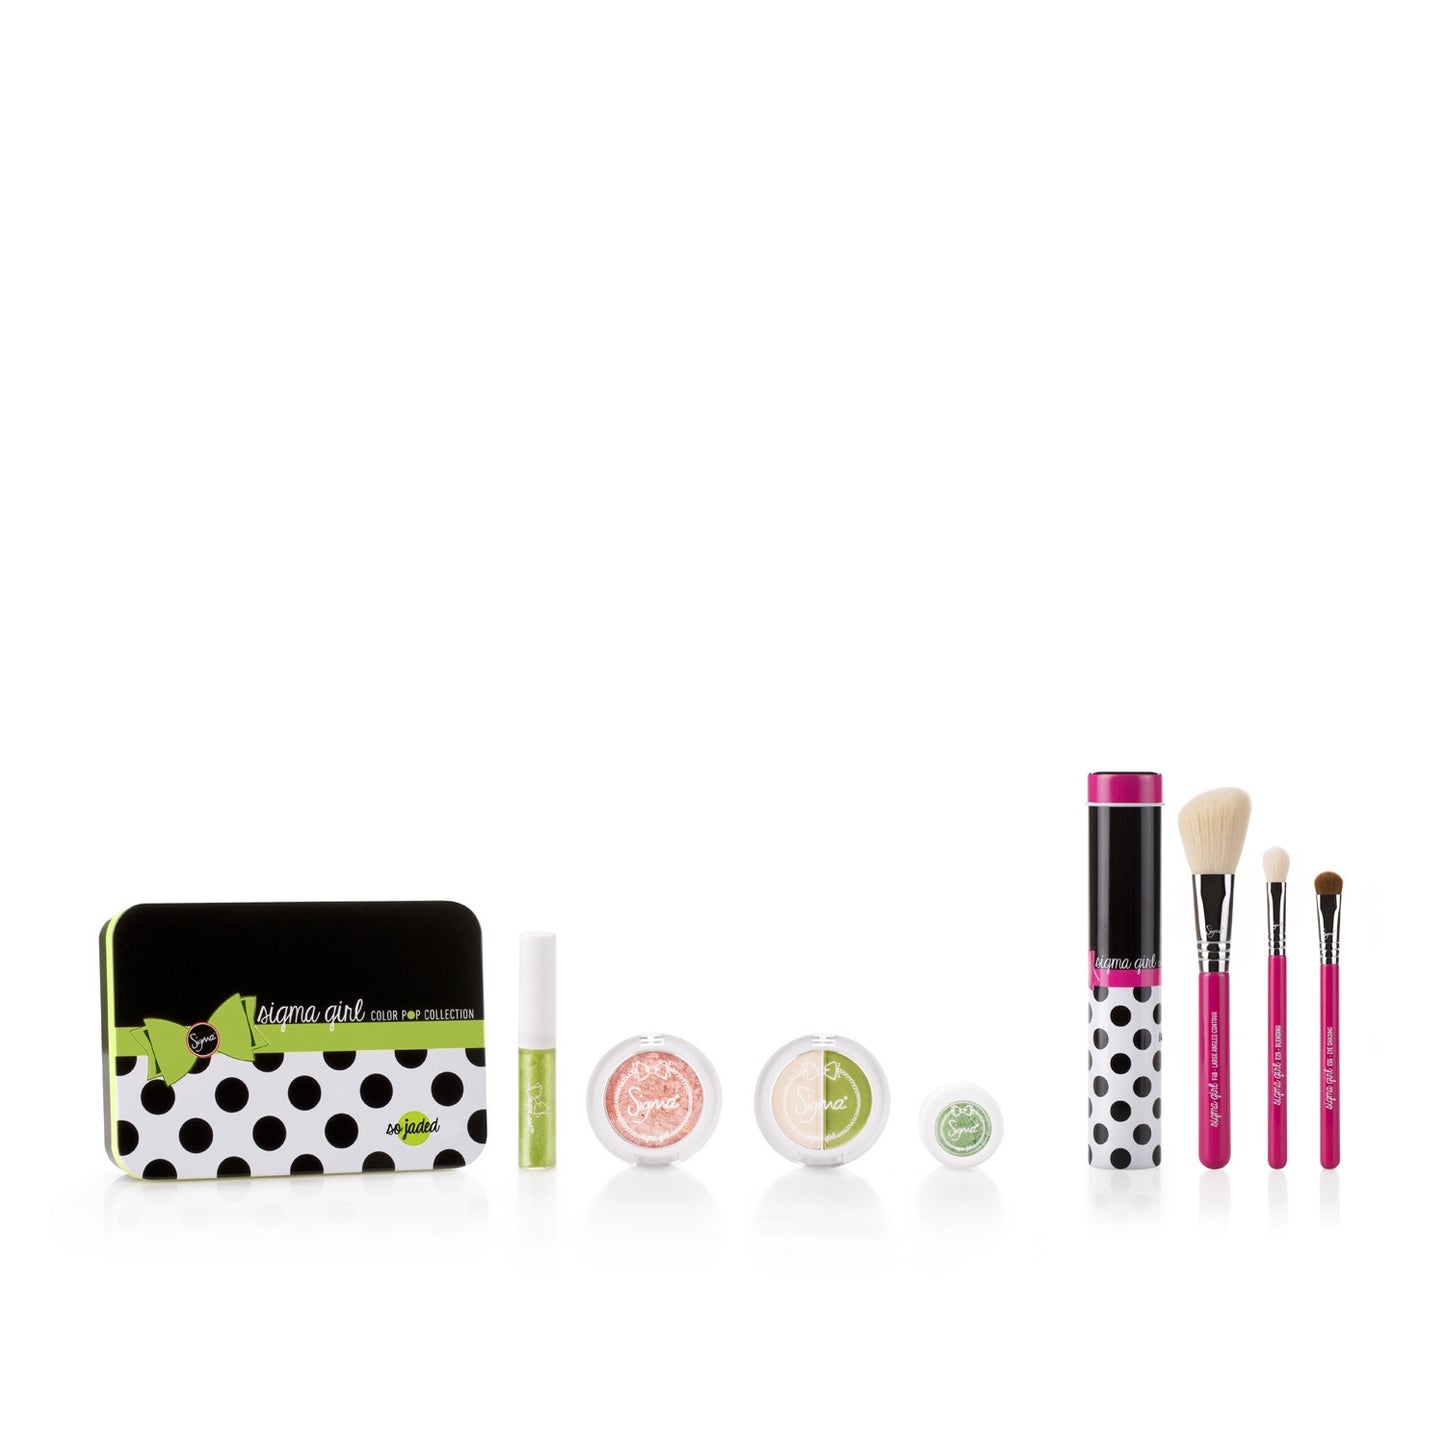 Sigma Girl Color Pop Makeup & Brush Set - So Jaded